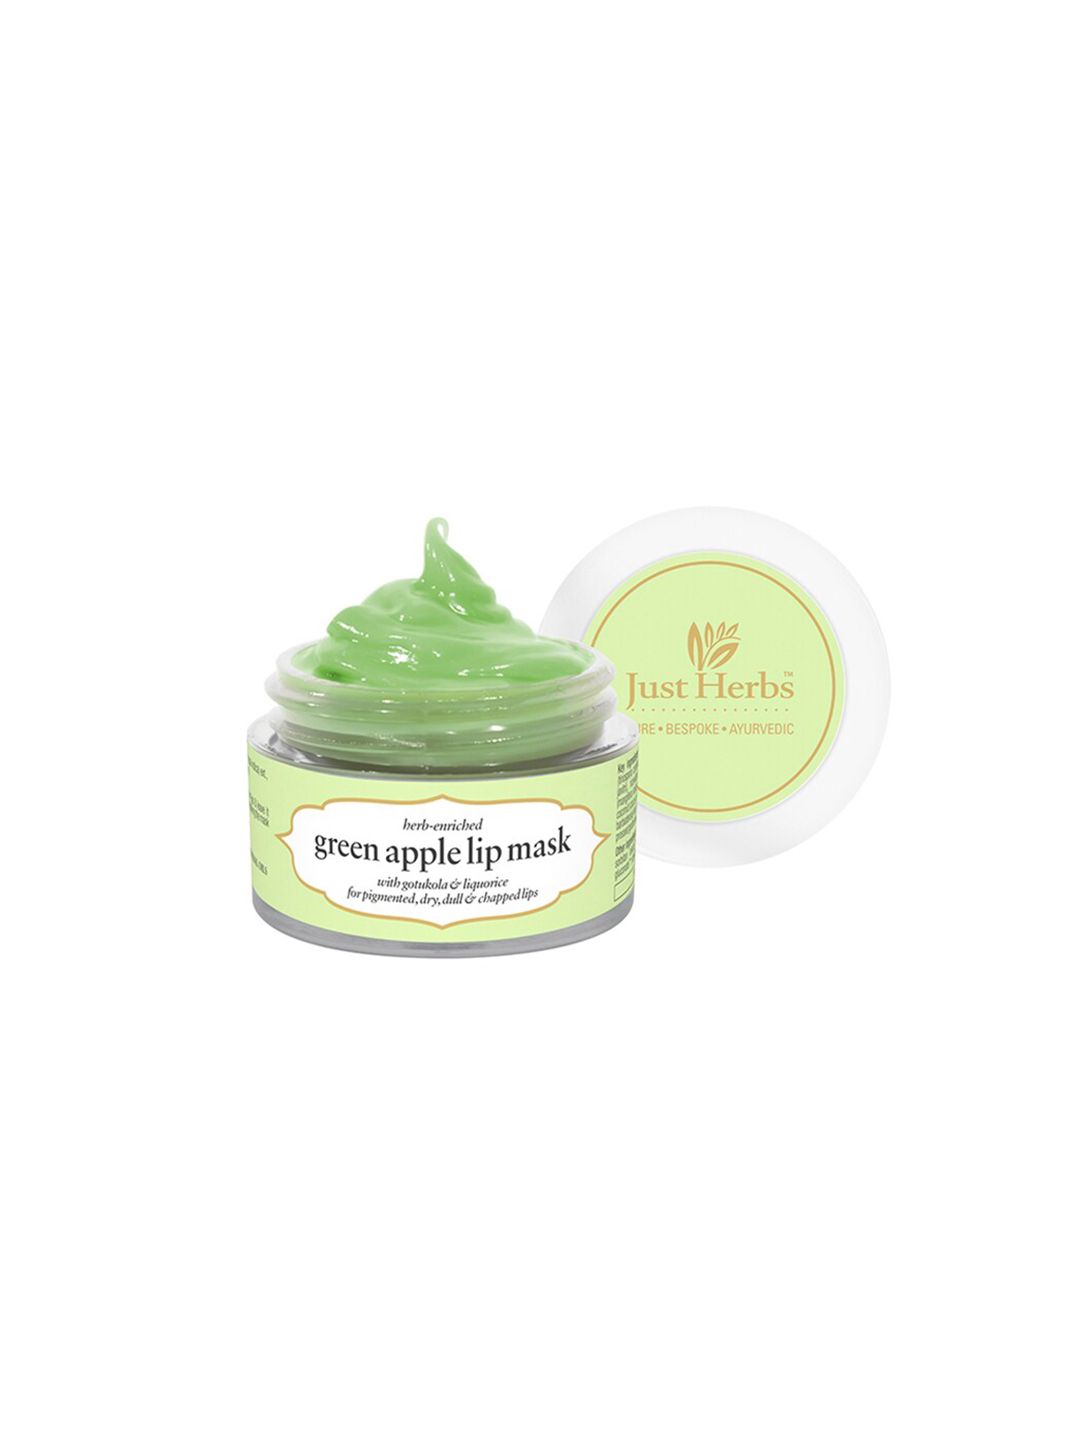 Just Herbs Green Apple Lip Sleeping Mask 15 g Price in India